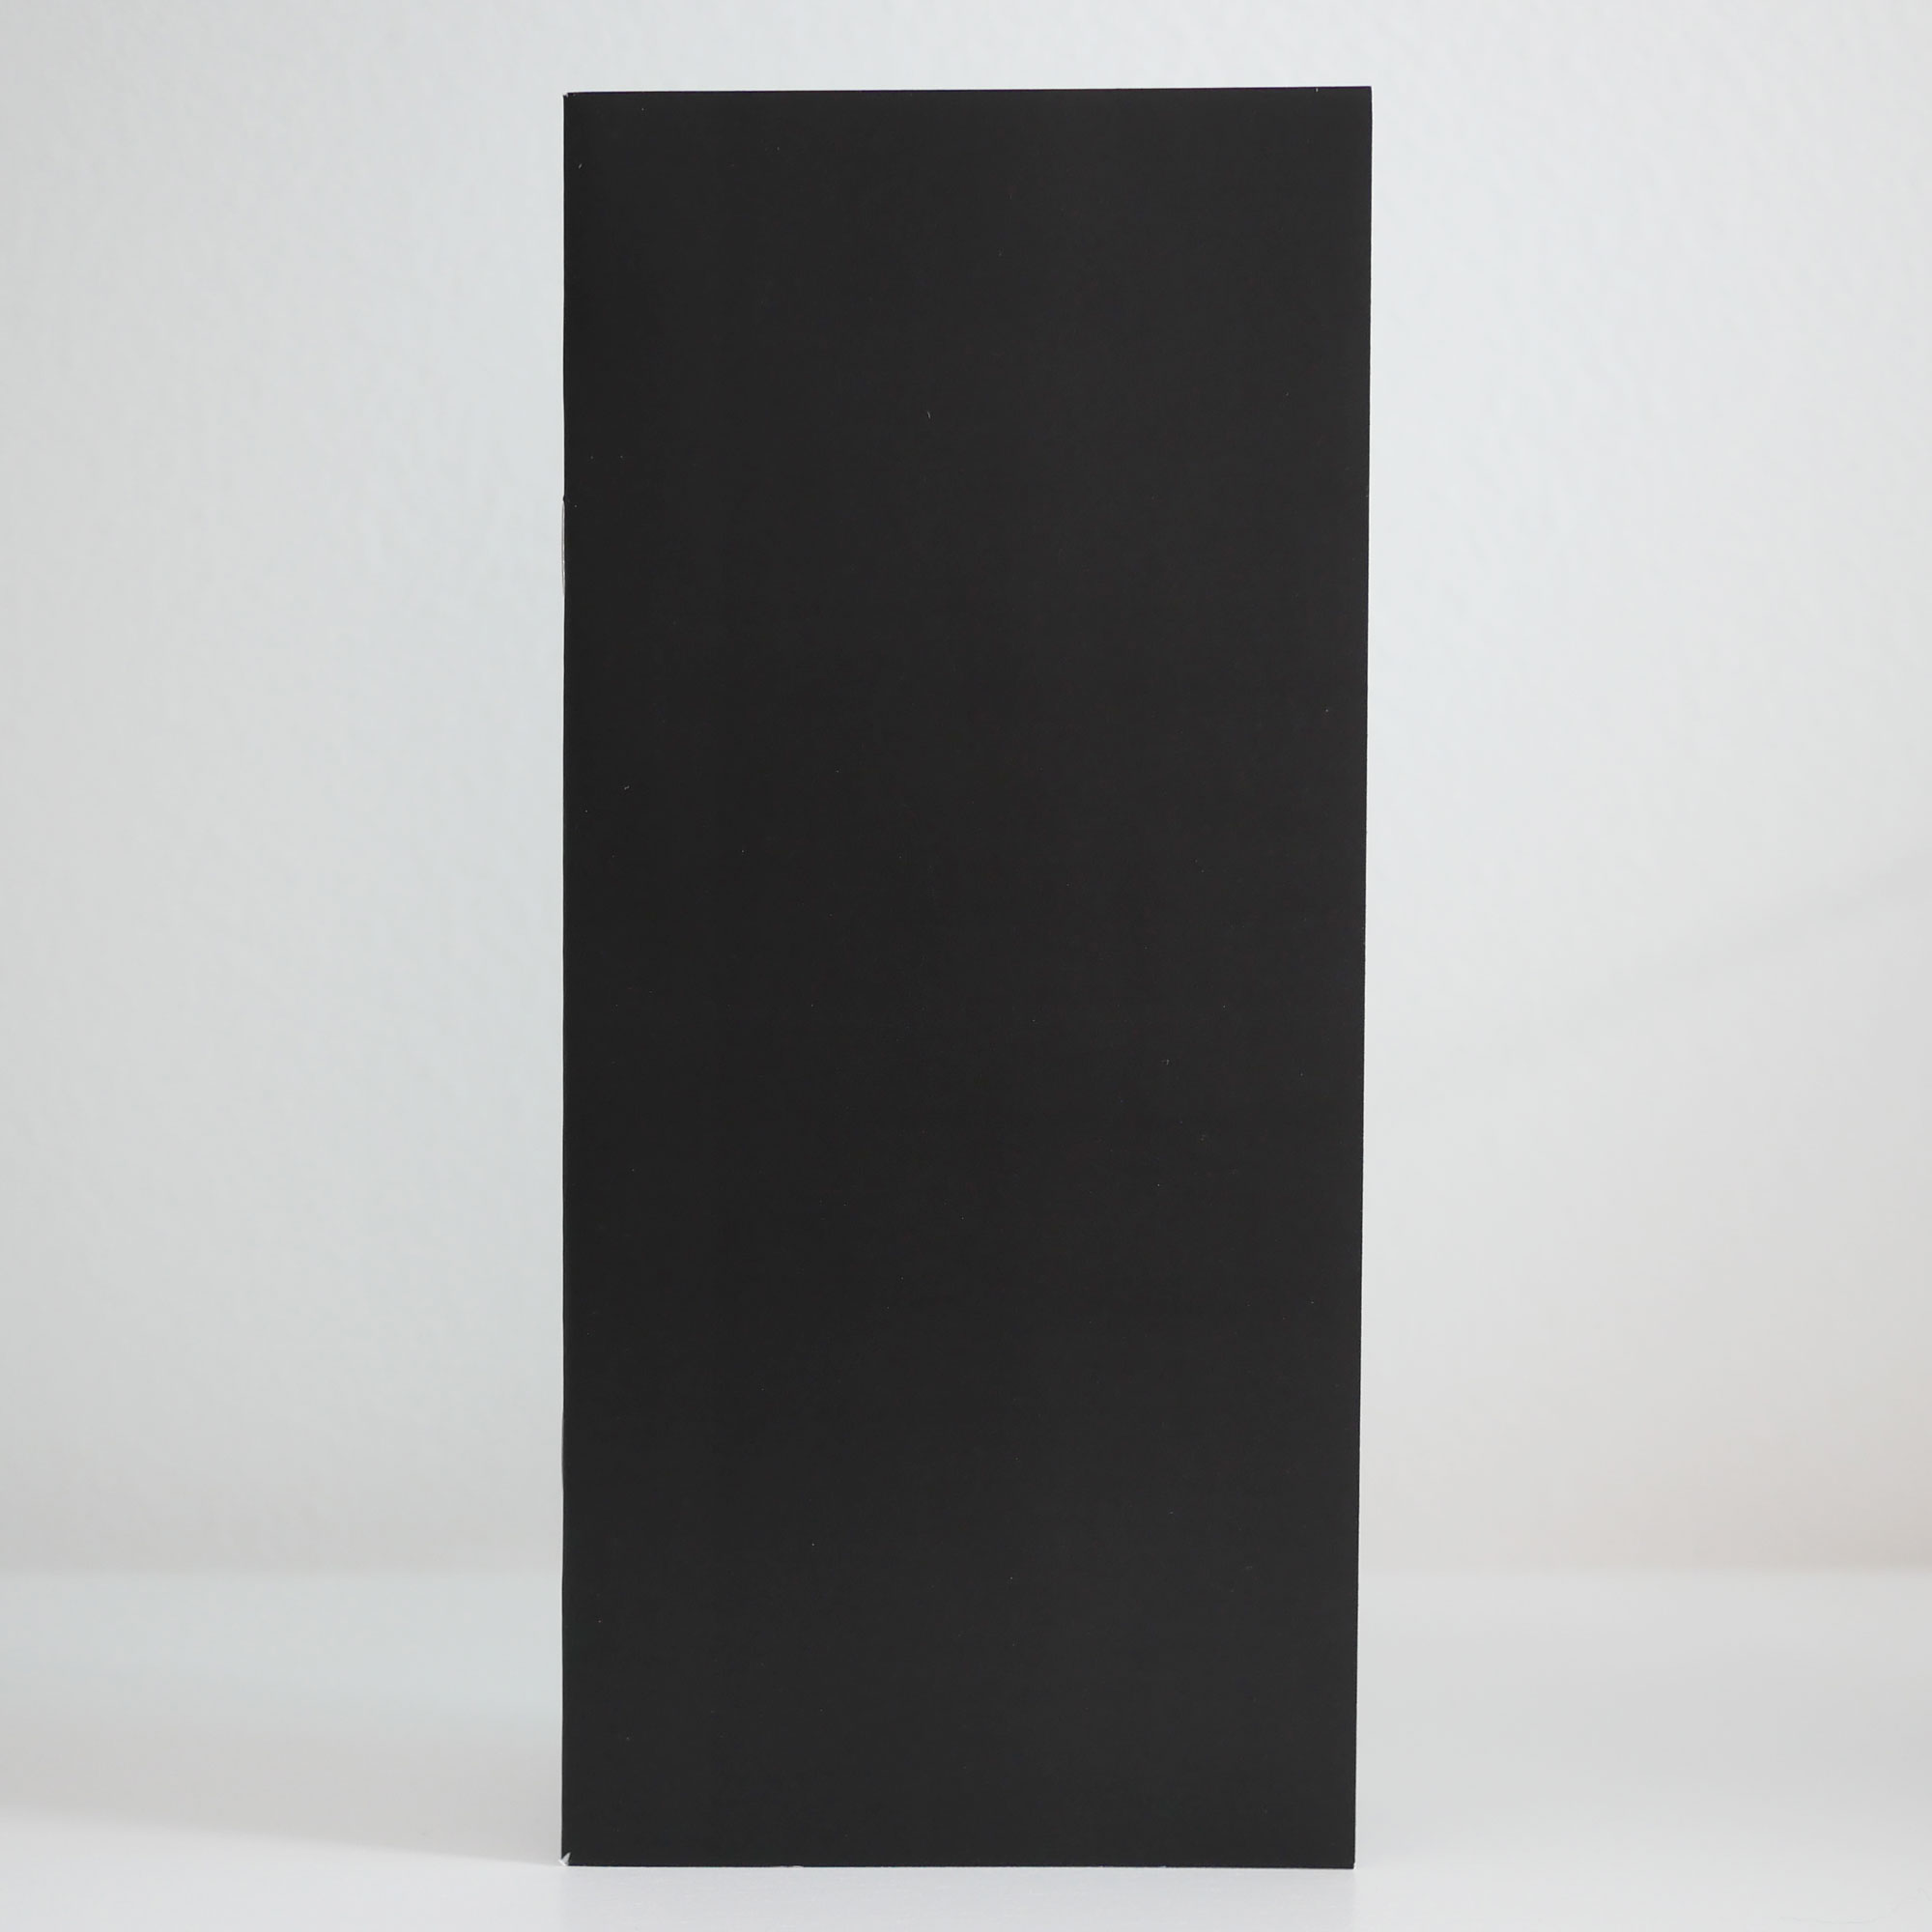 A black, rectangular zine stands like a black monolith.